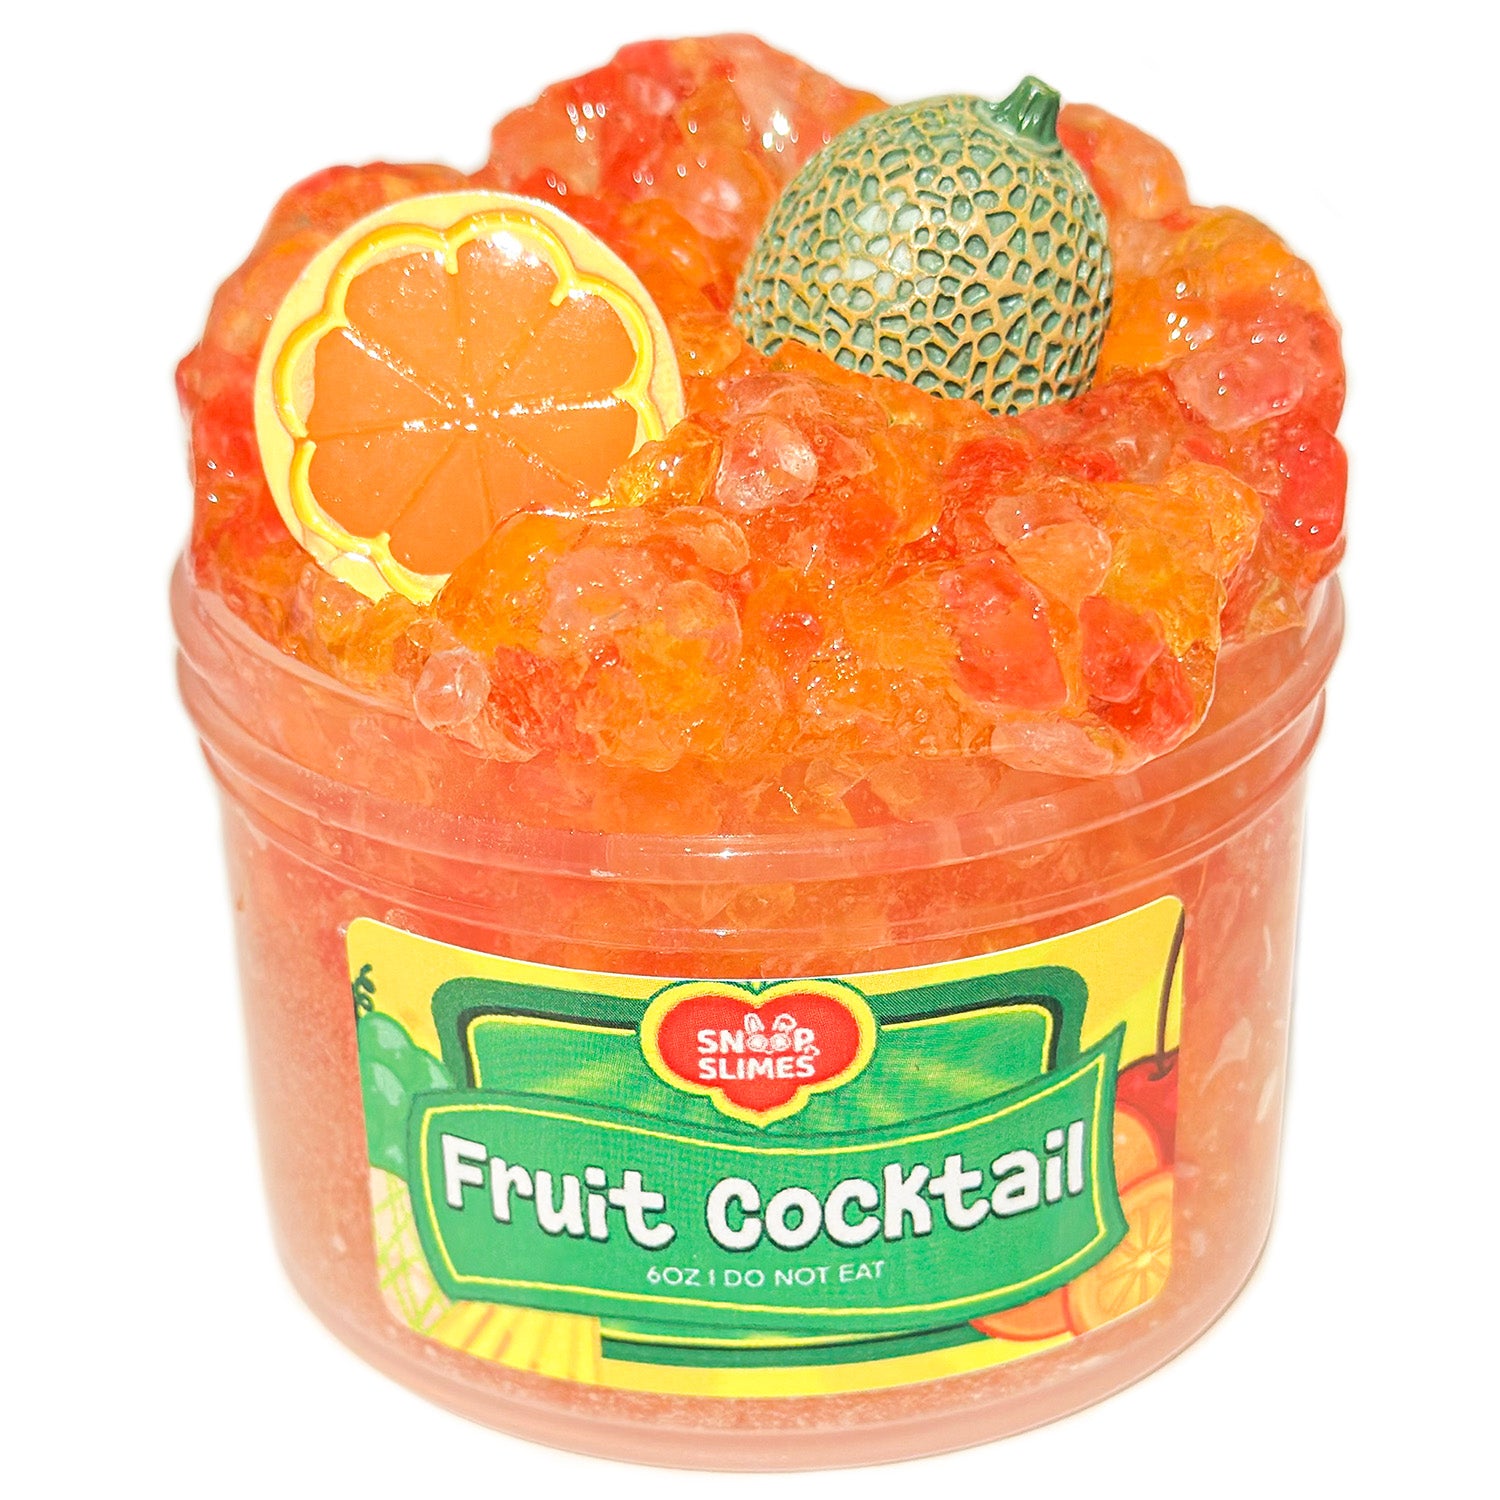 Fruit Cocktail Slime